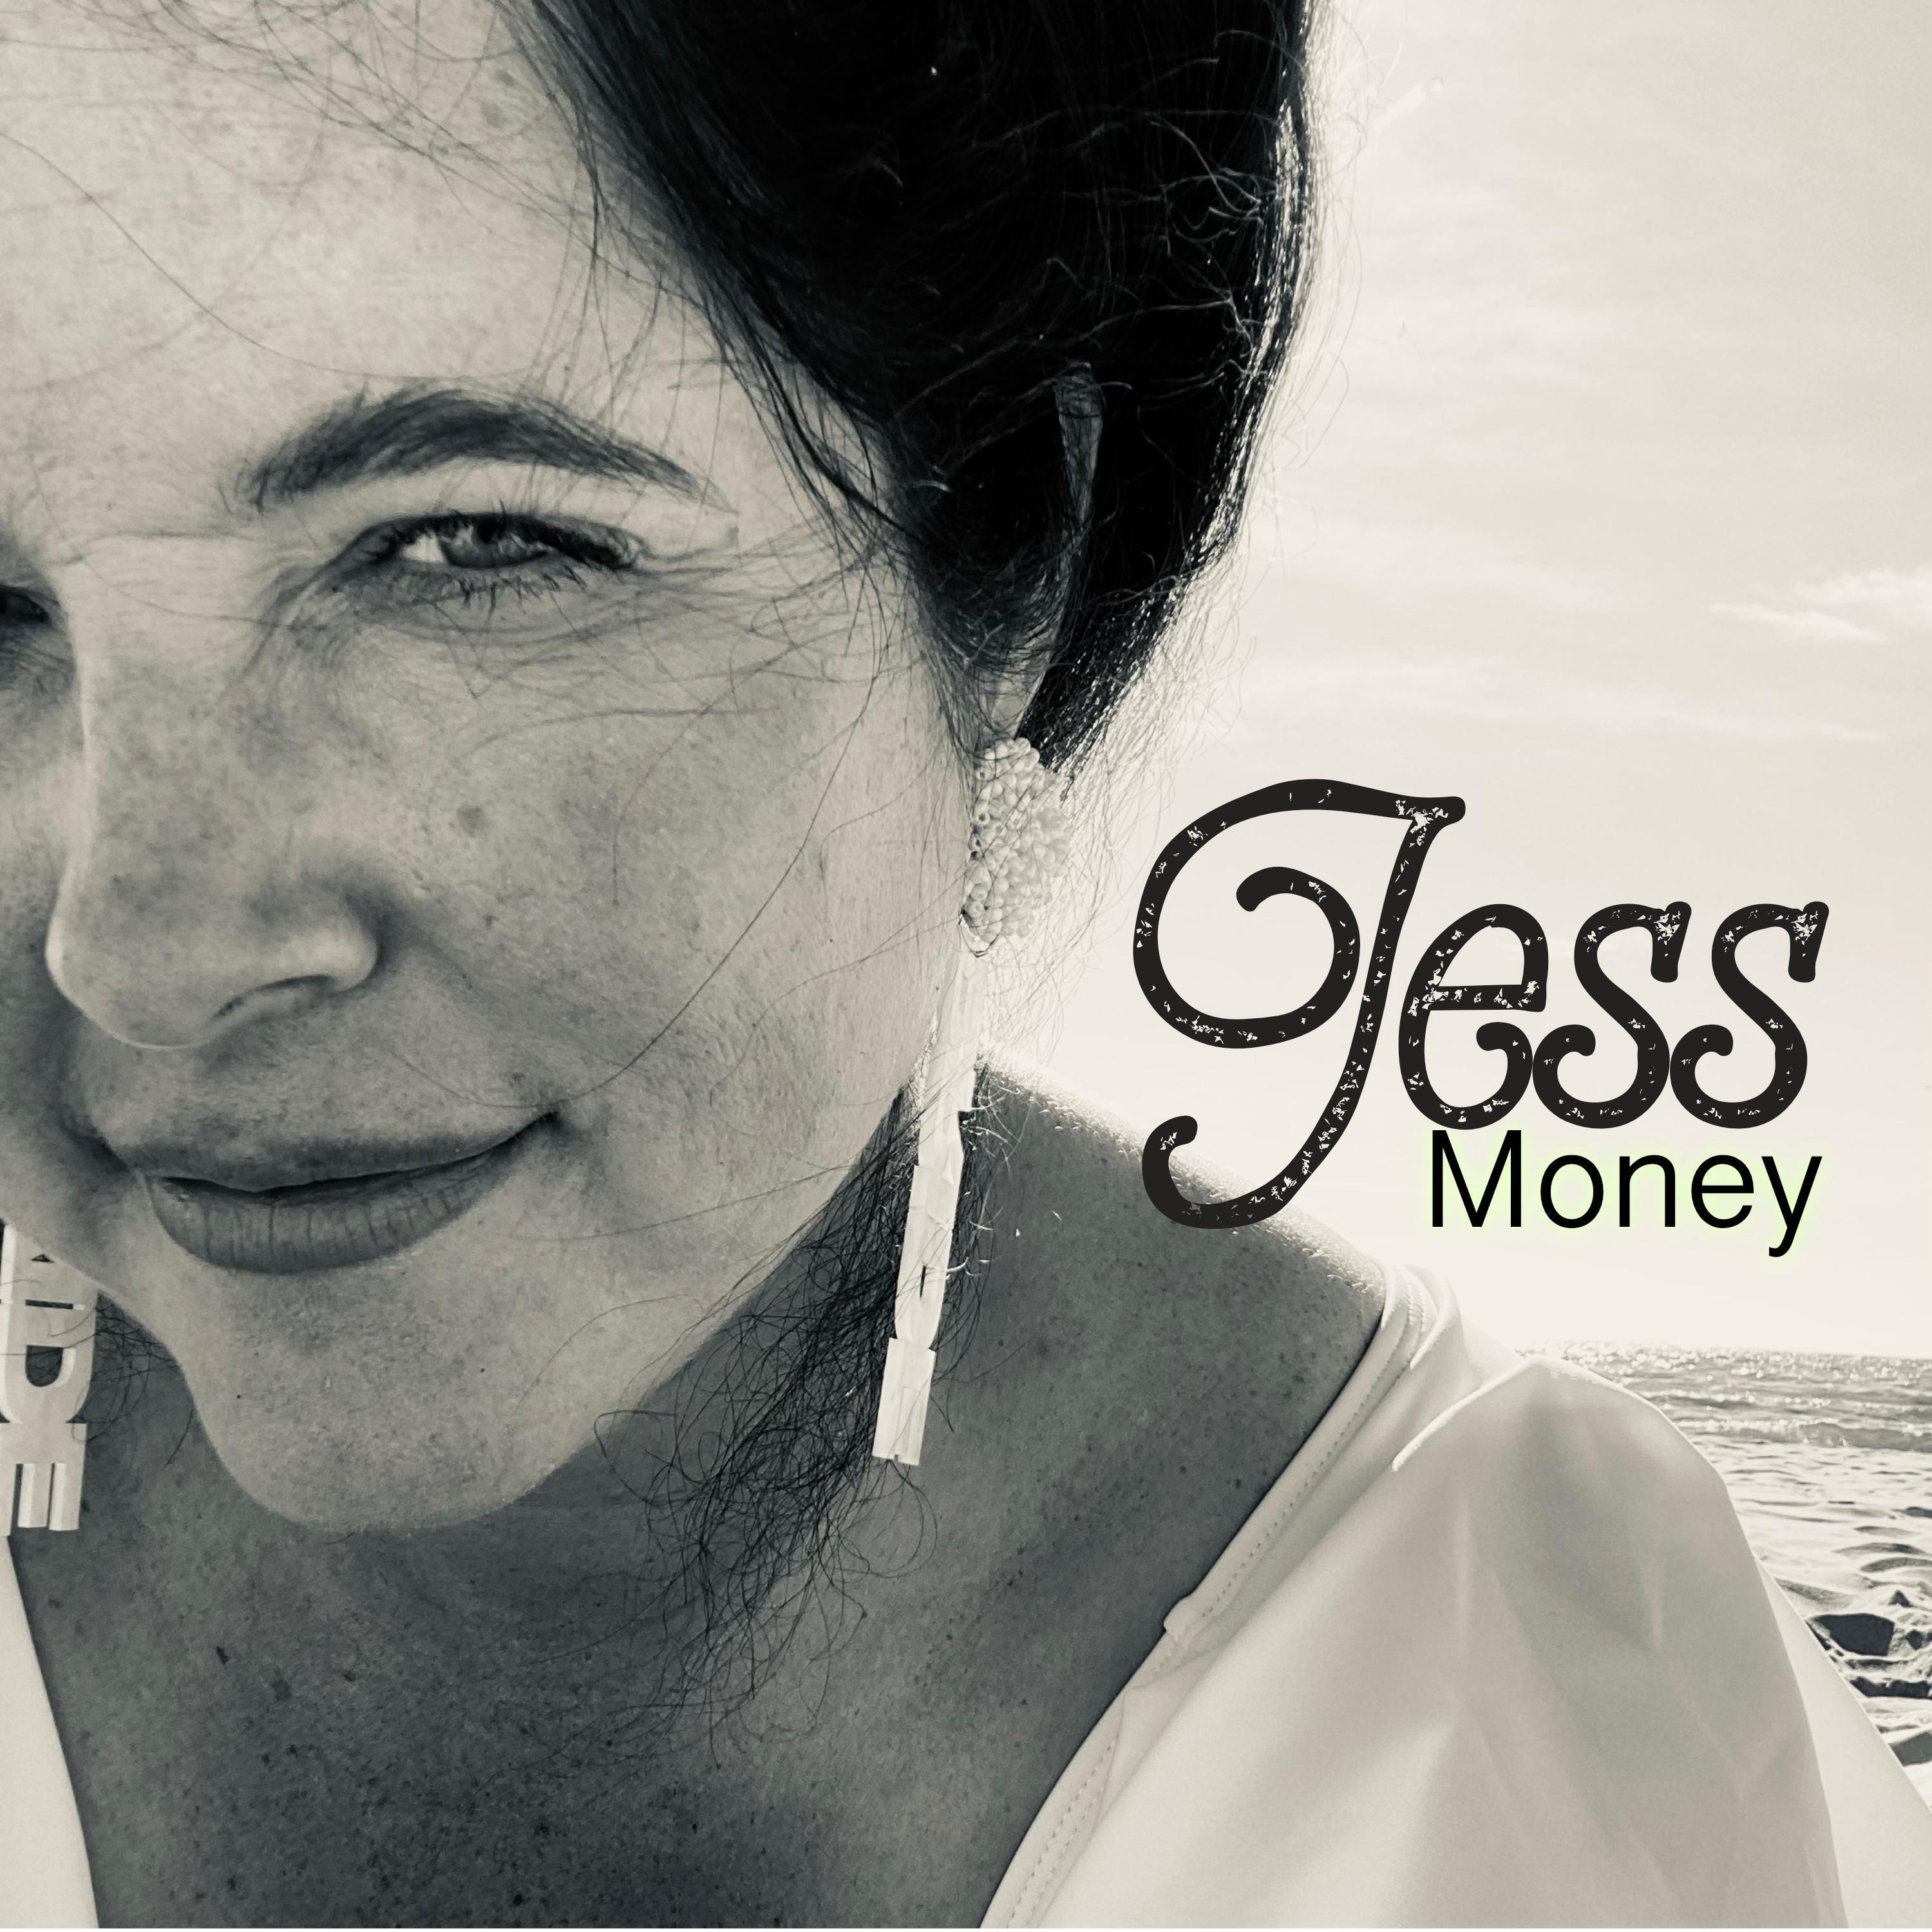 Jess. - Money (feat. Hornets Daughter, Lorraine & Marley Jacobson)